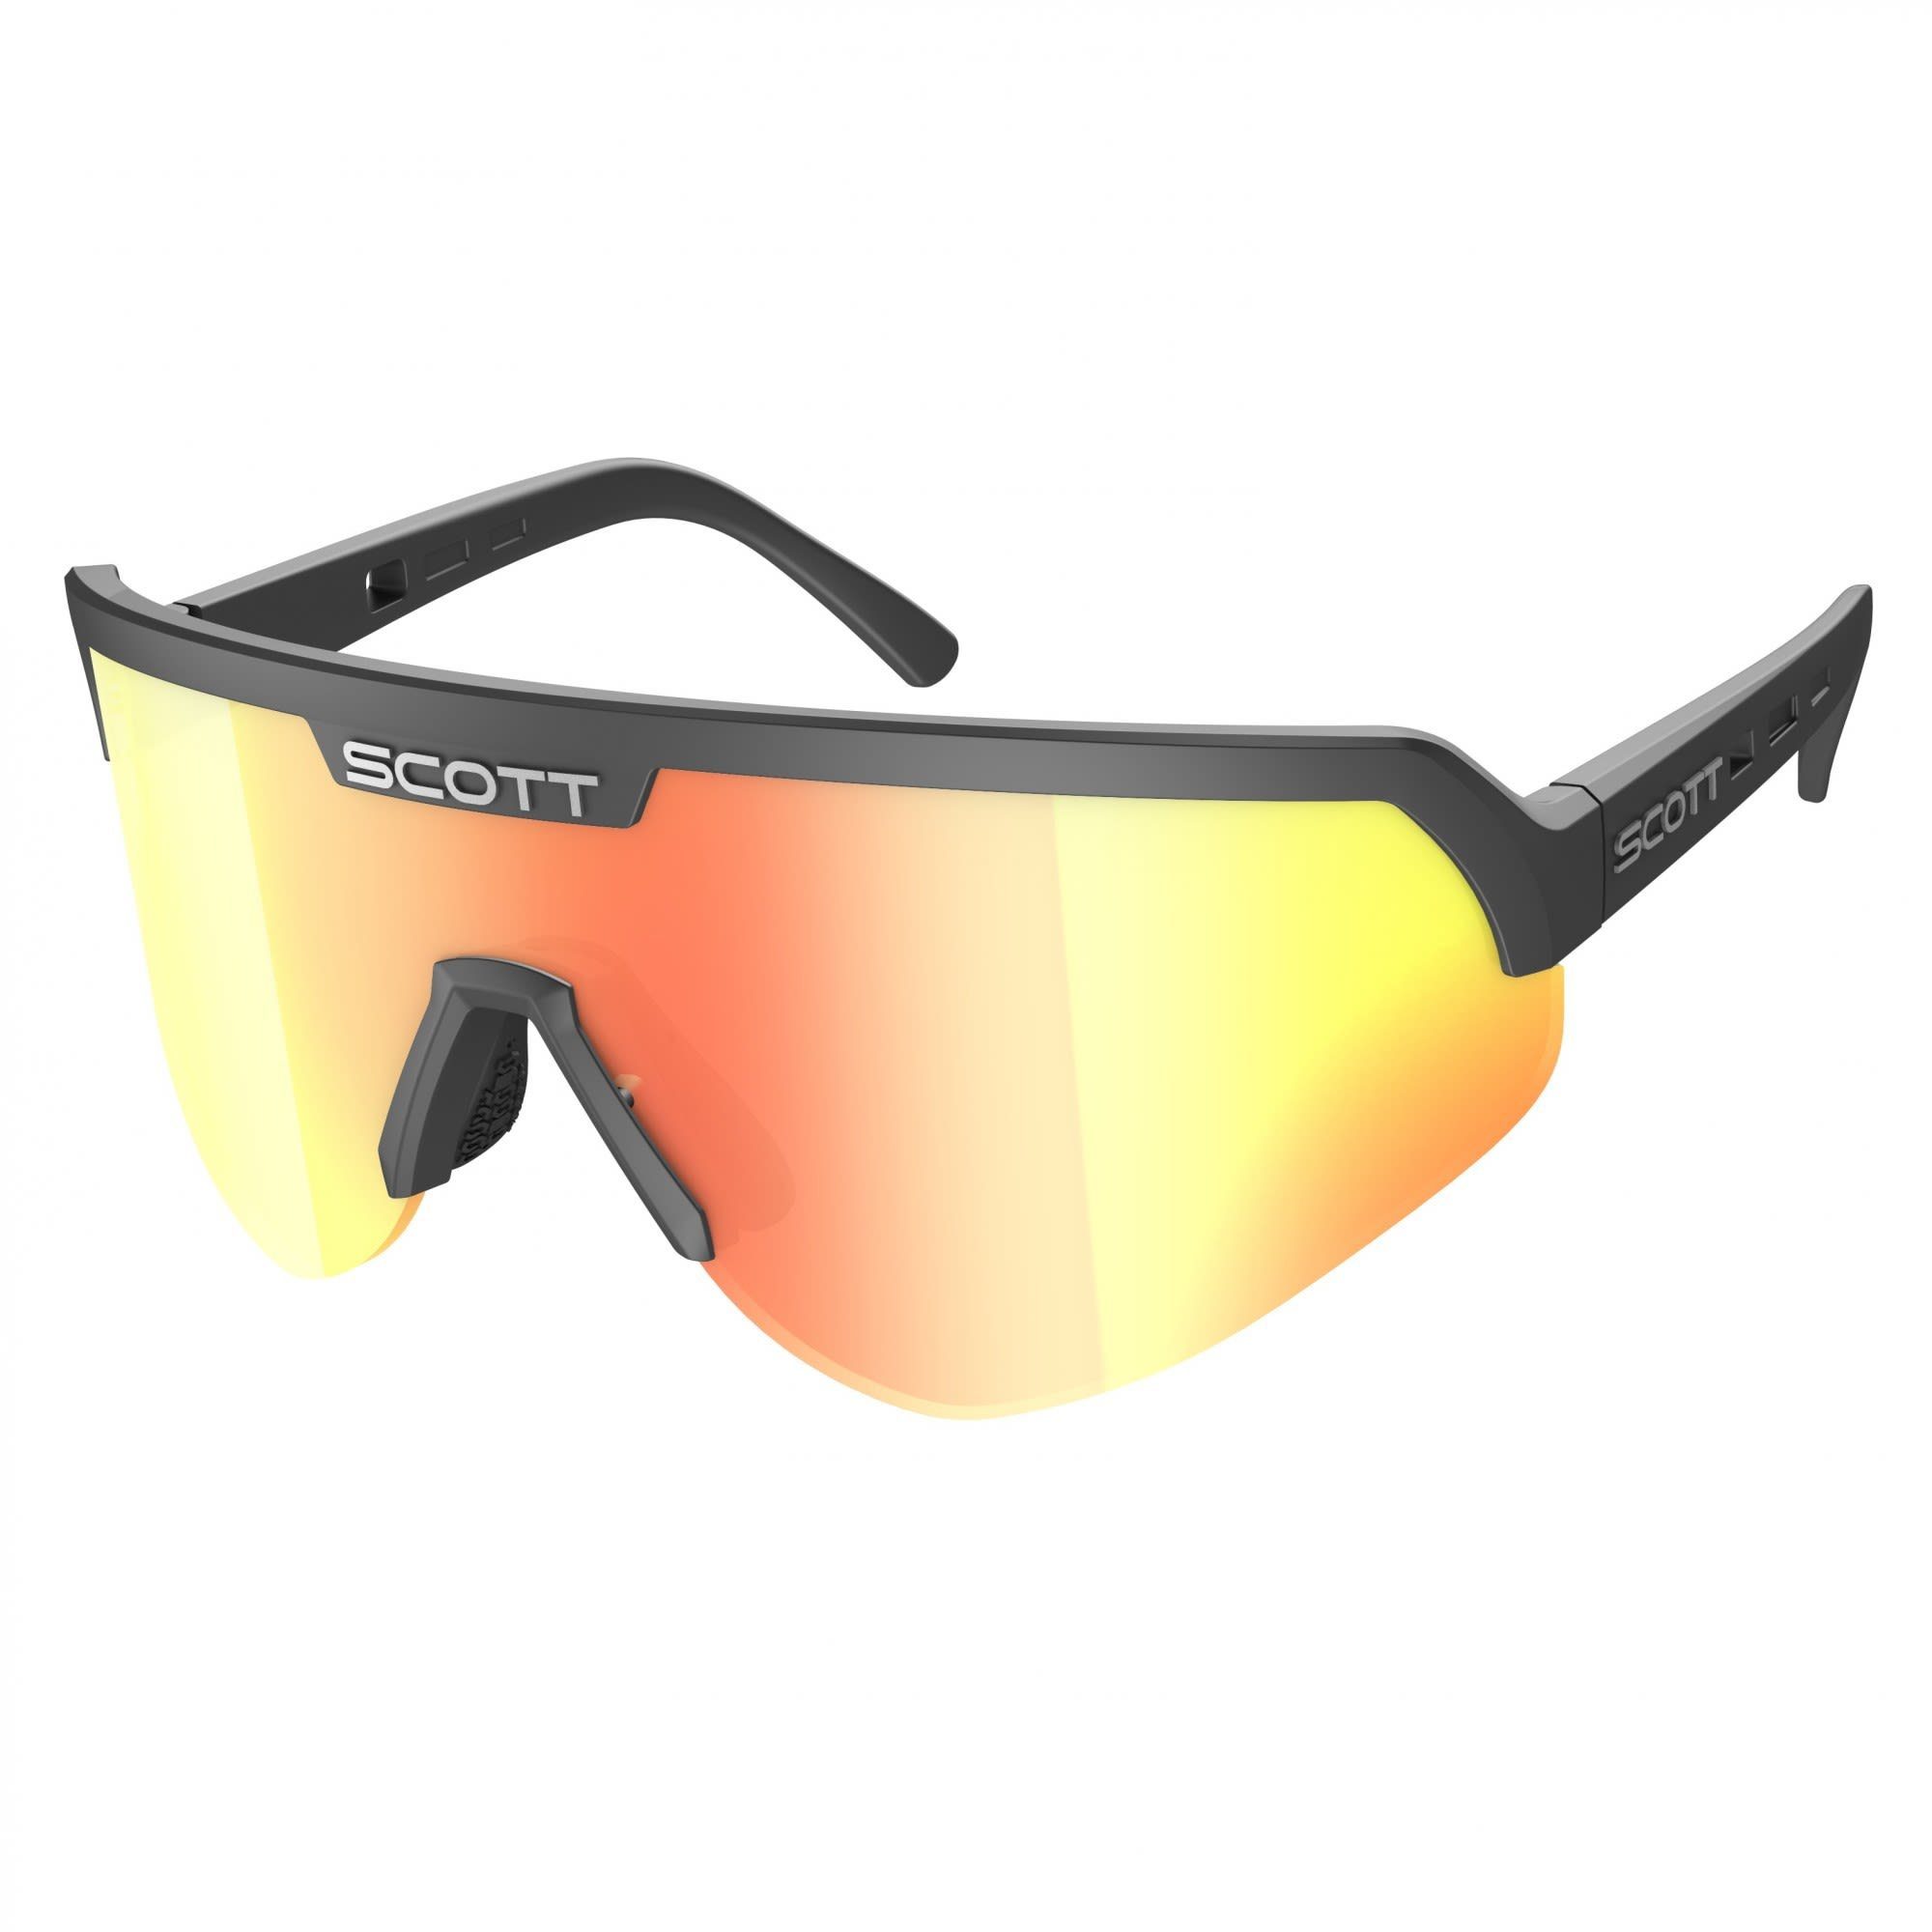 Scott Fahrradbrille Scott Sport Shield Sunglasses Accessoires